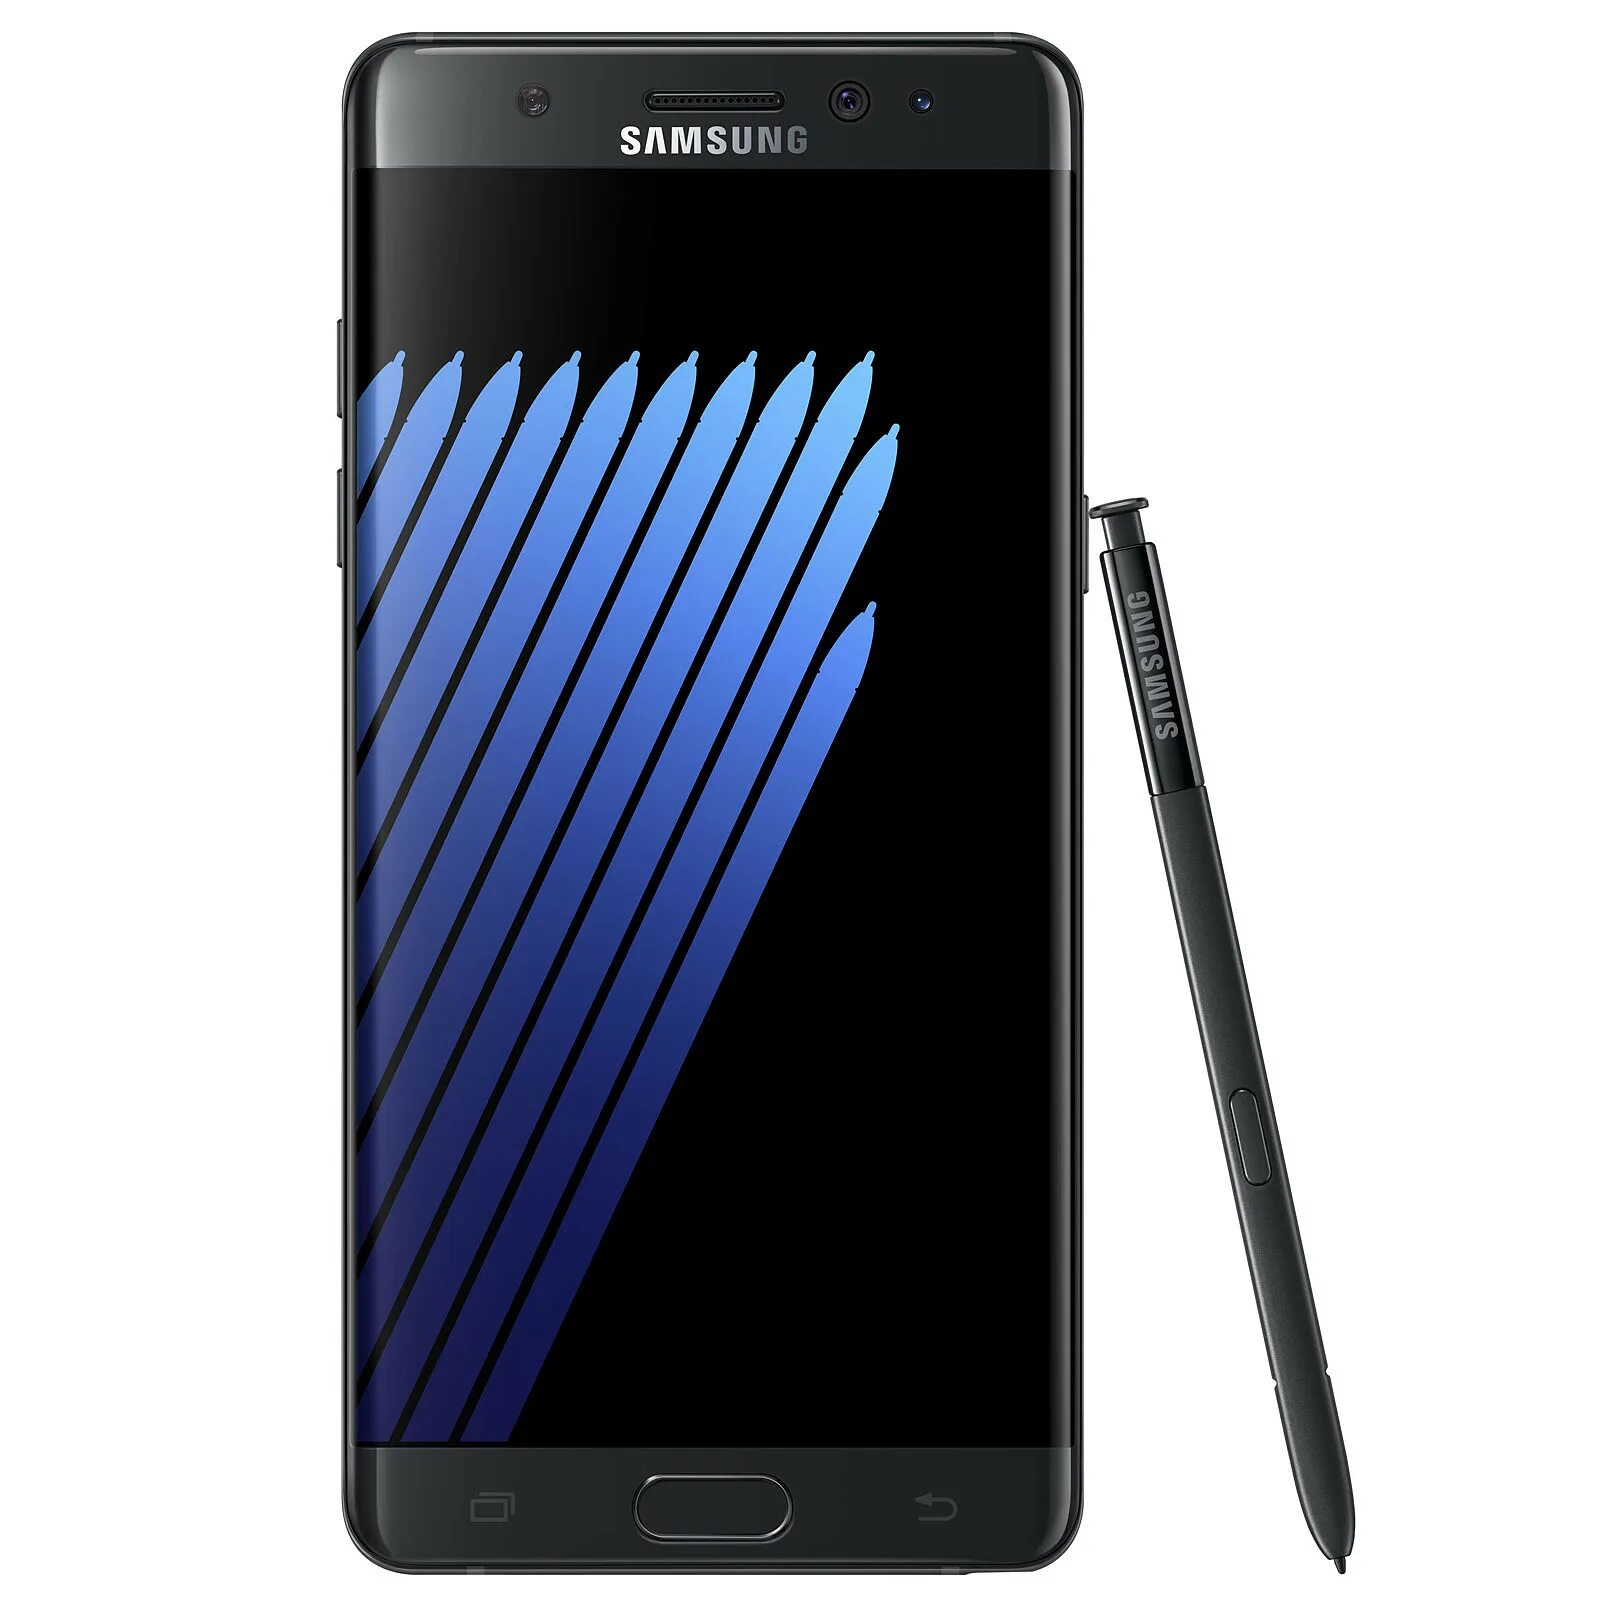 Galaxy note ru. Самсунг галакси нот 7. Самсунг ноут 7s. Samsung Galaxy Note 7 Fe. Samsung Galaxy Note 7 2016.